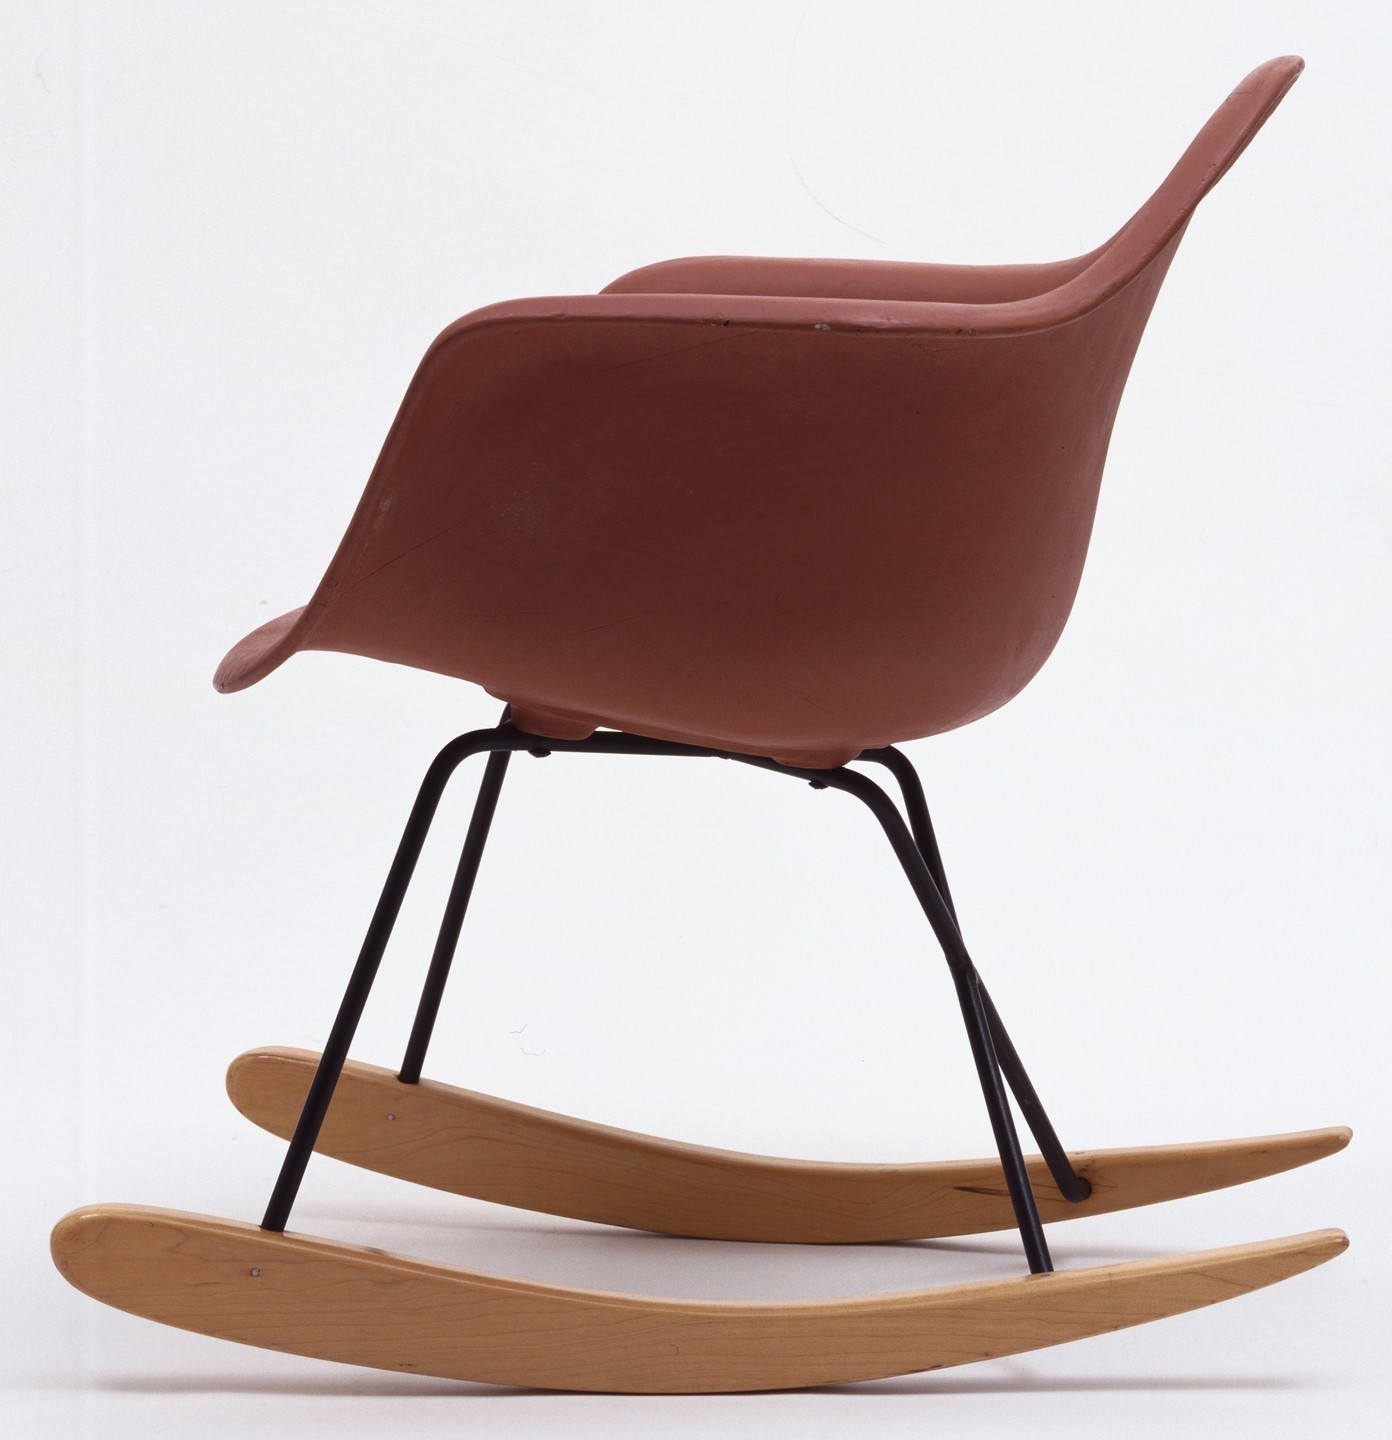 Plastic Chair Primer prototipo de mecedora 